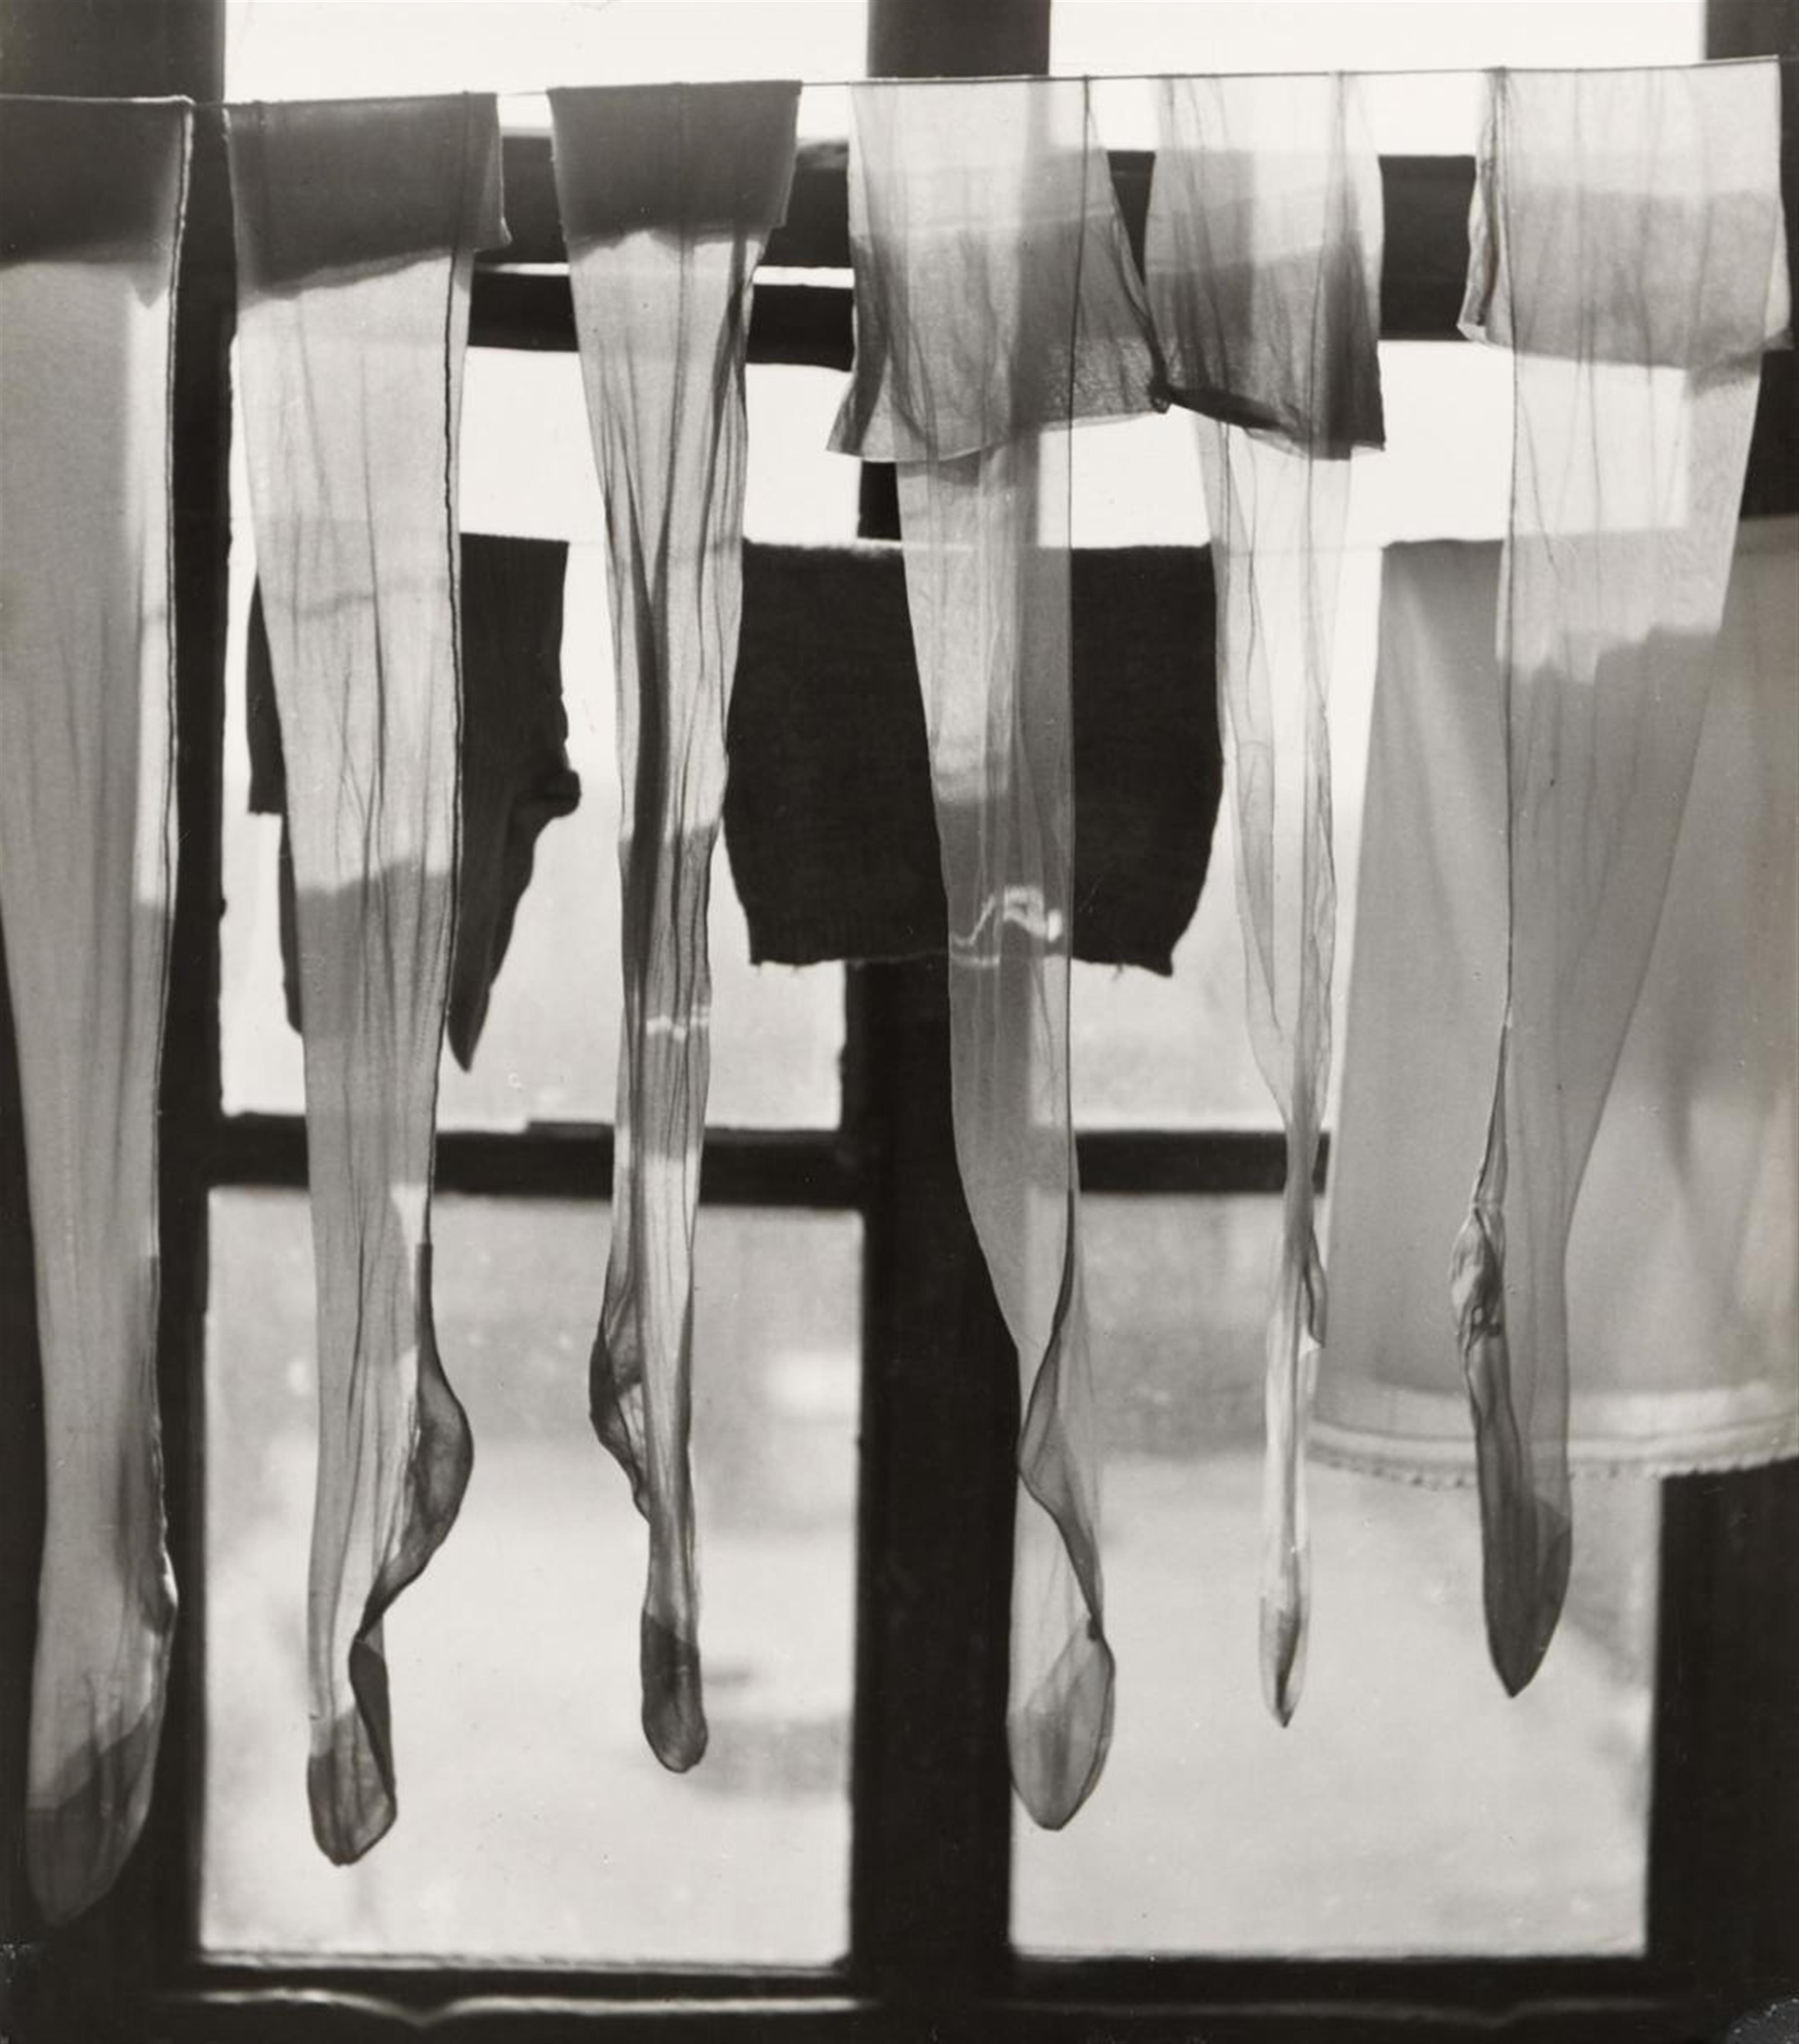 János Szász - Stockings drying in the window - image-1